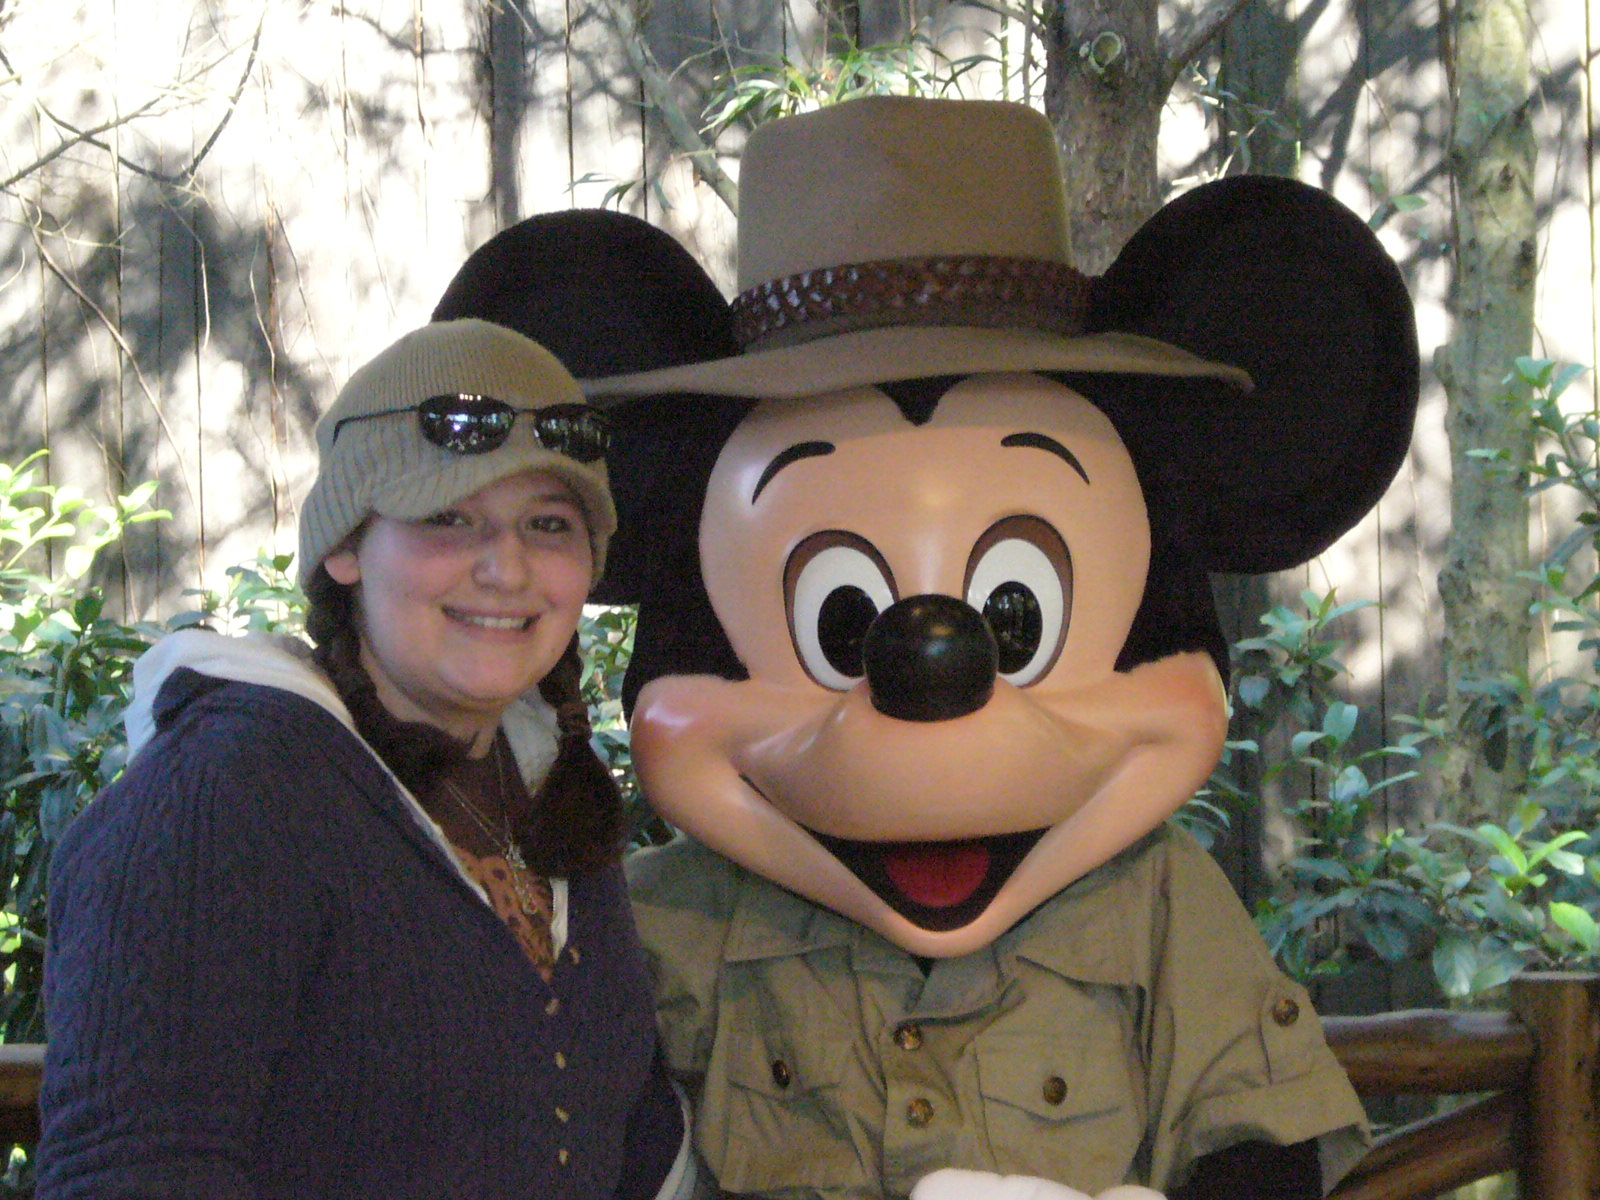 Camp Minnie and Mickey